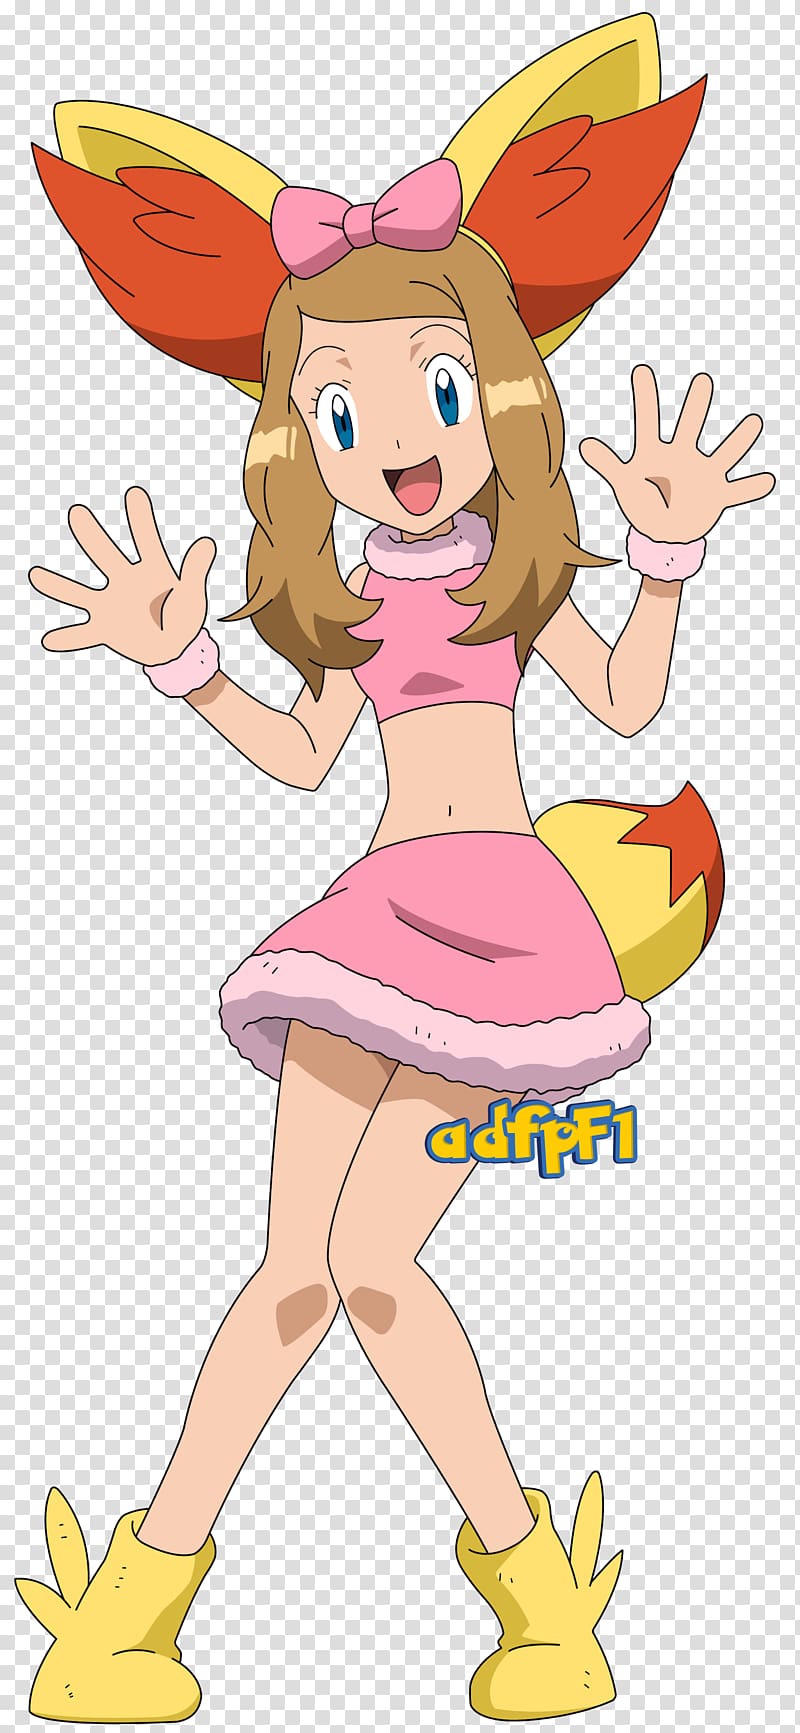 Serena Ash Ketchum Pokémon X and Y Misty Pikachu, pikachu transparent backg...